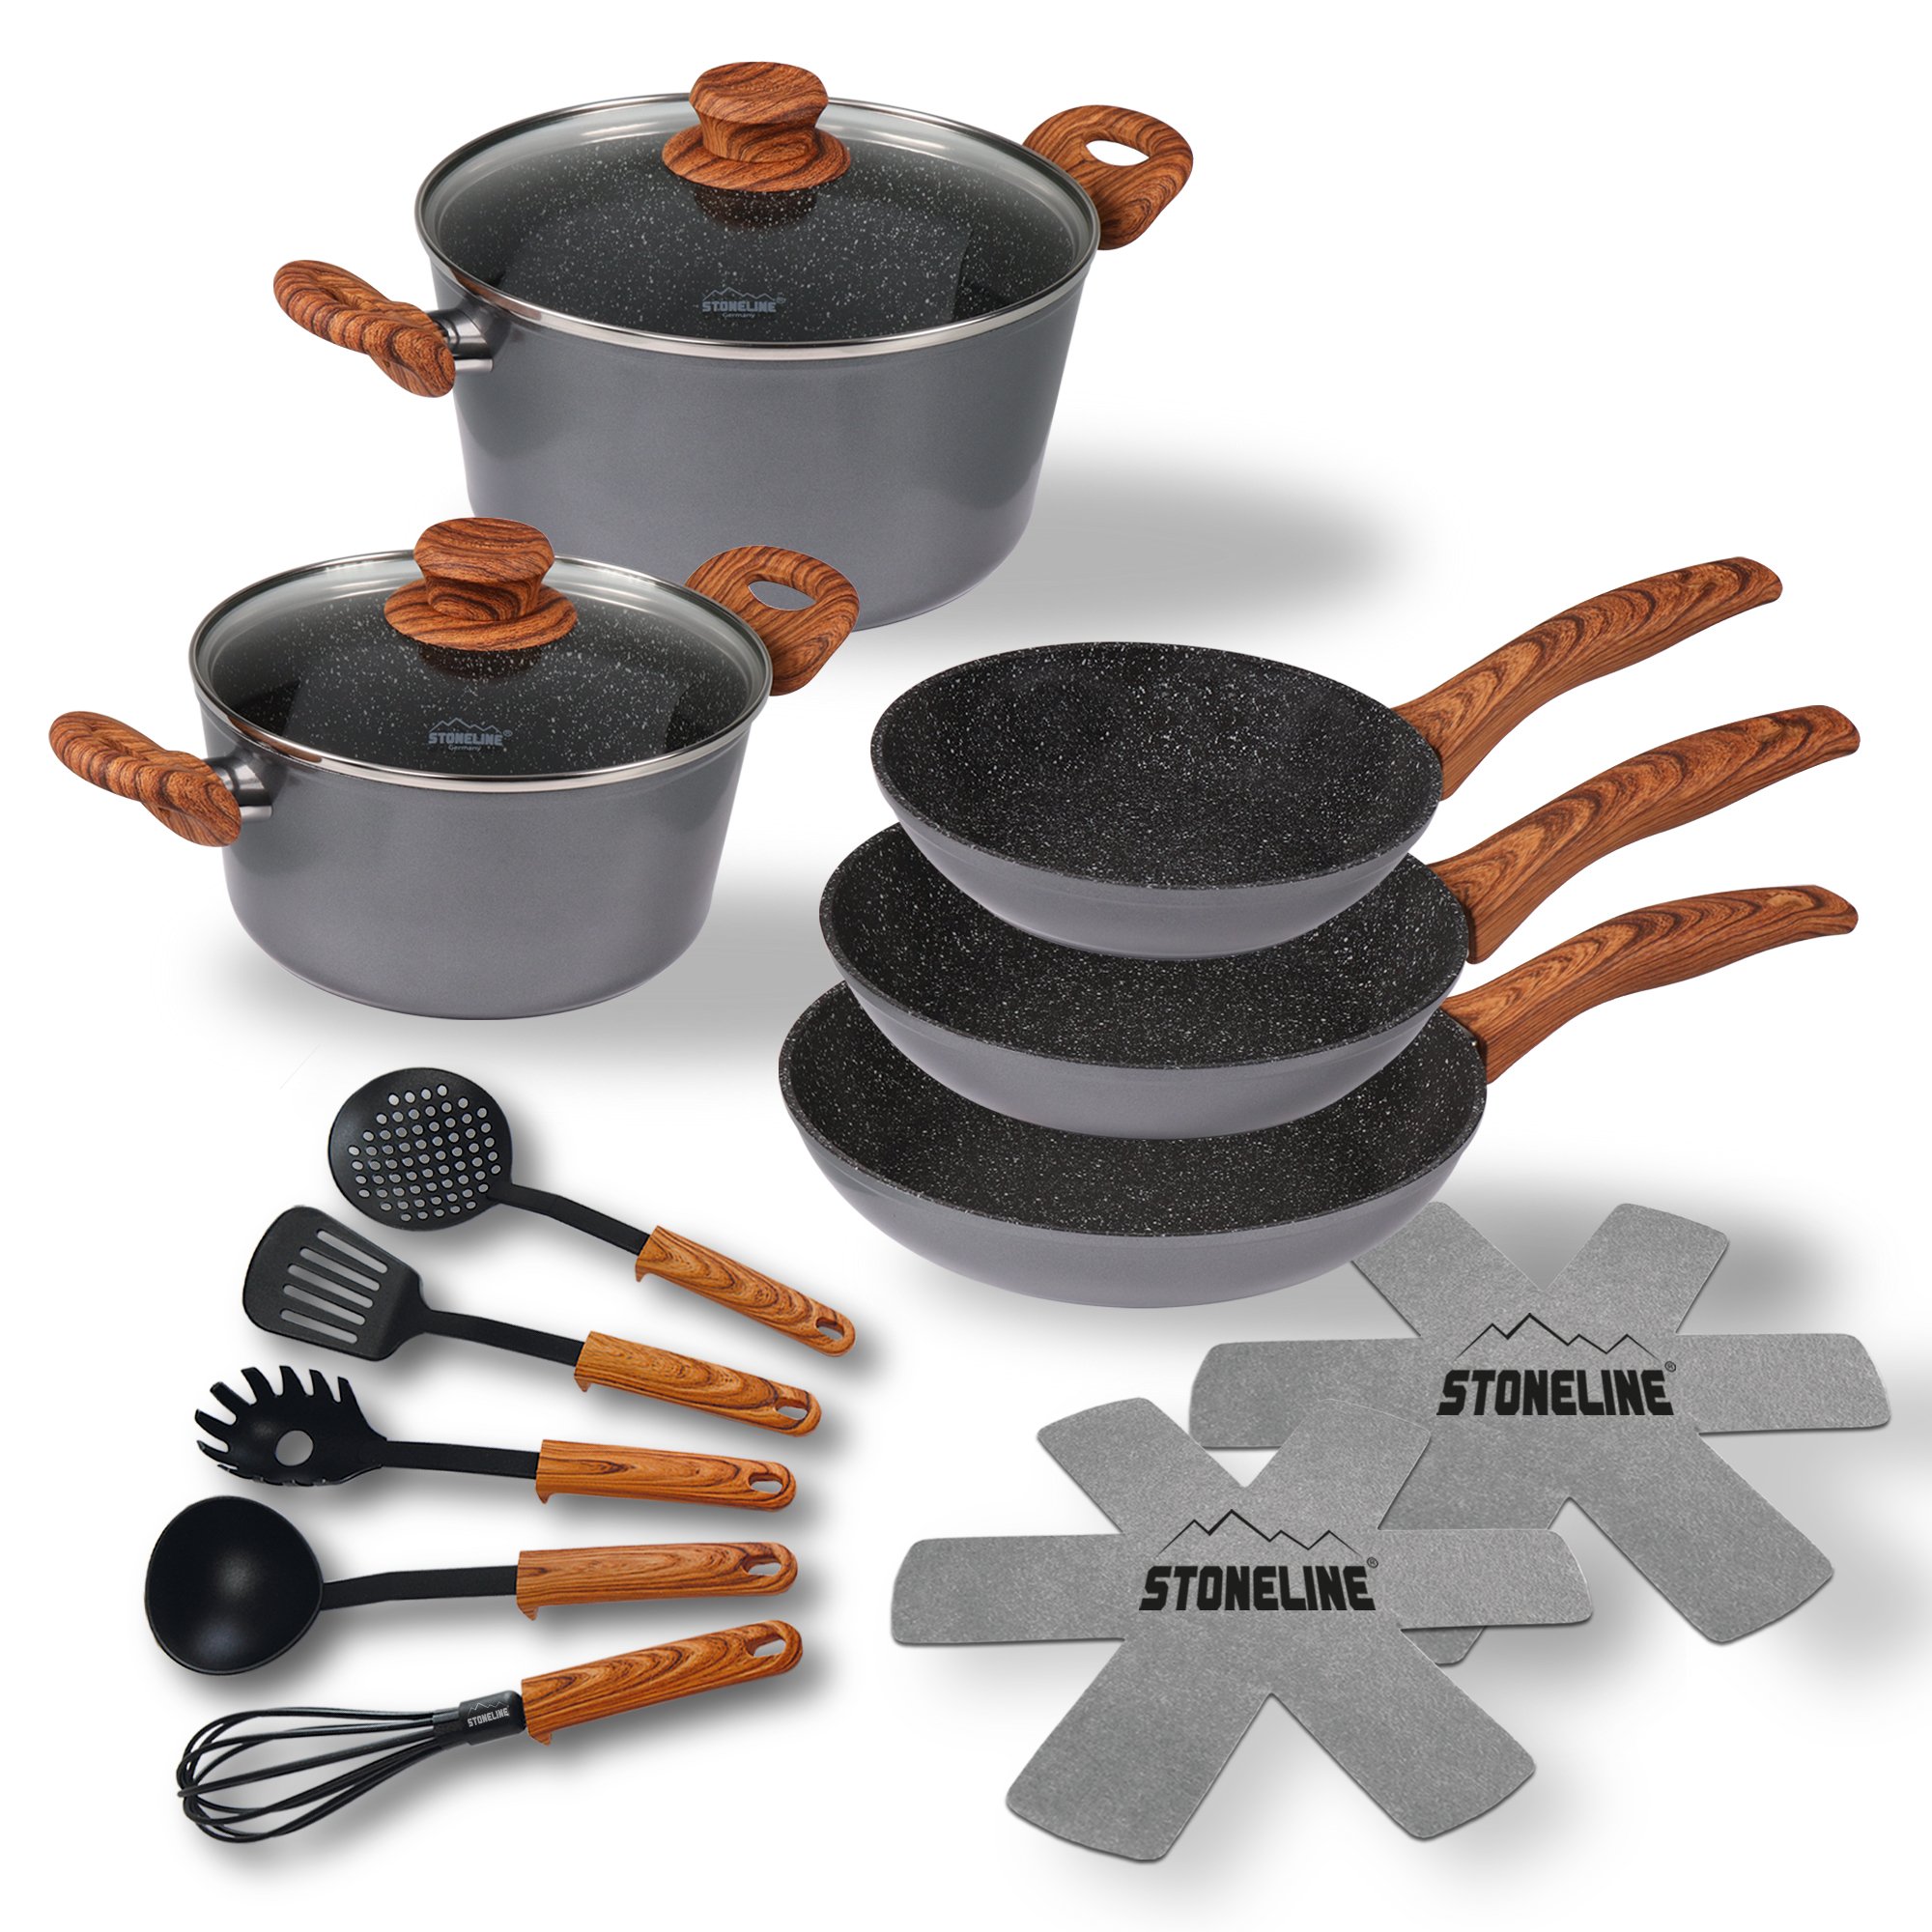 STONELINE® 14 pc Cookware Set, with Lids, Non-Stick Pots Pans | Back to Nature